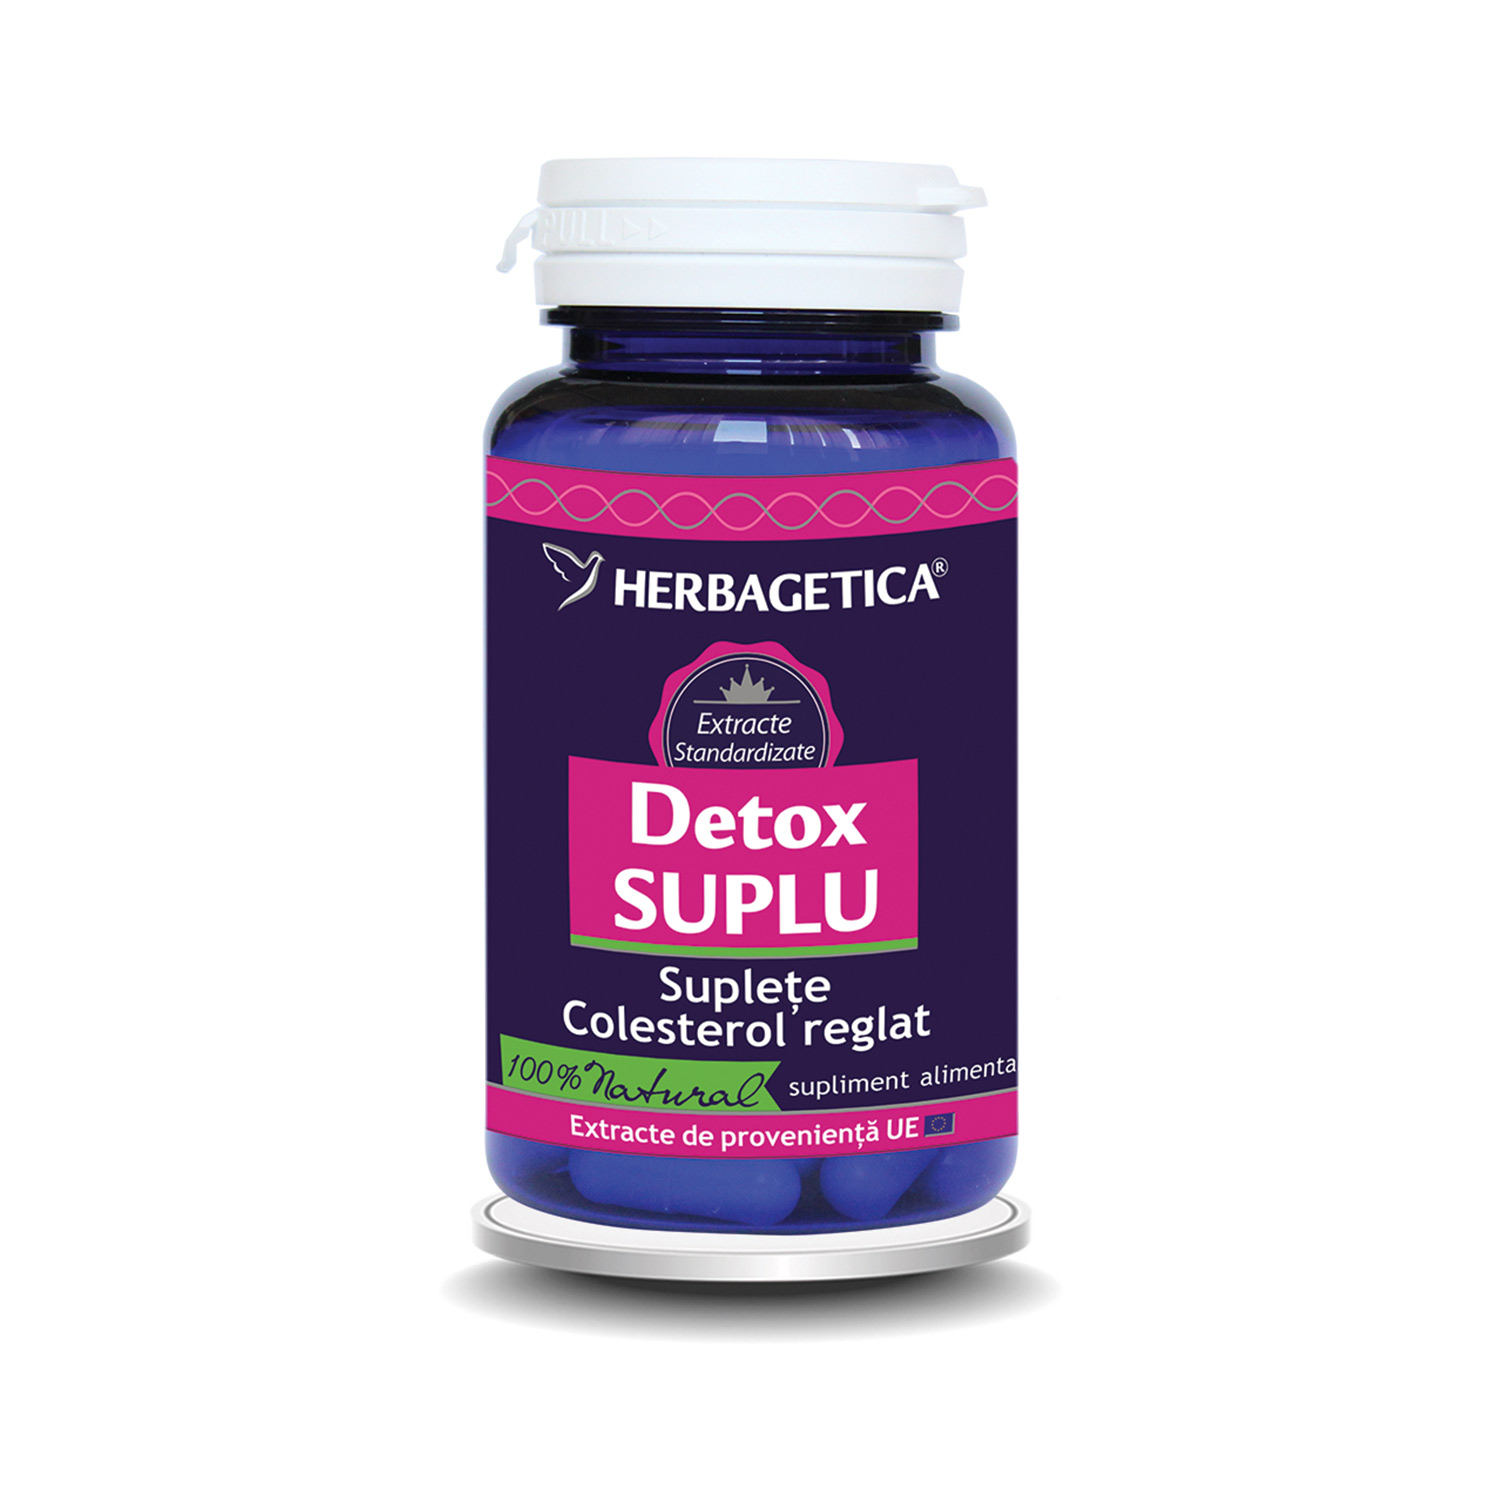 Detox activ, 60 capsule, Herbagetica